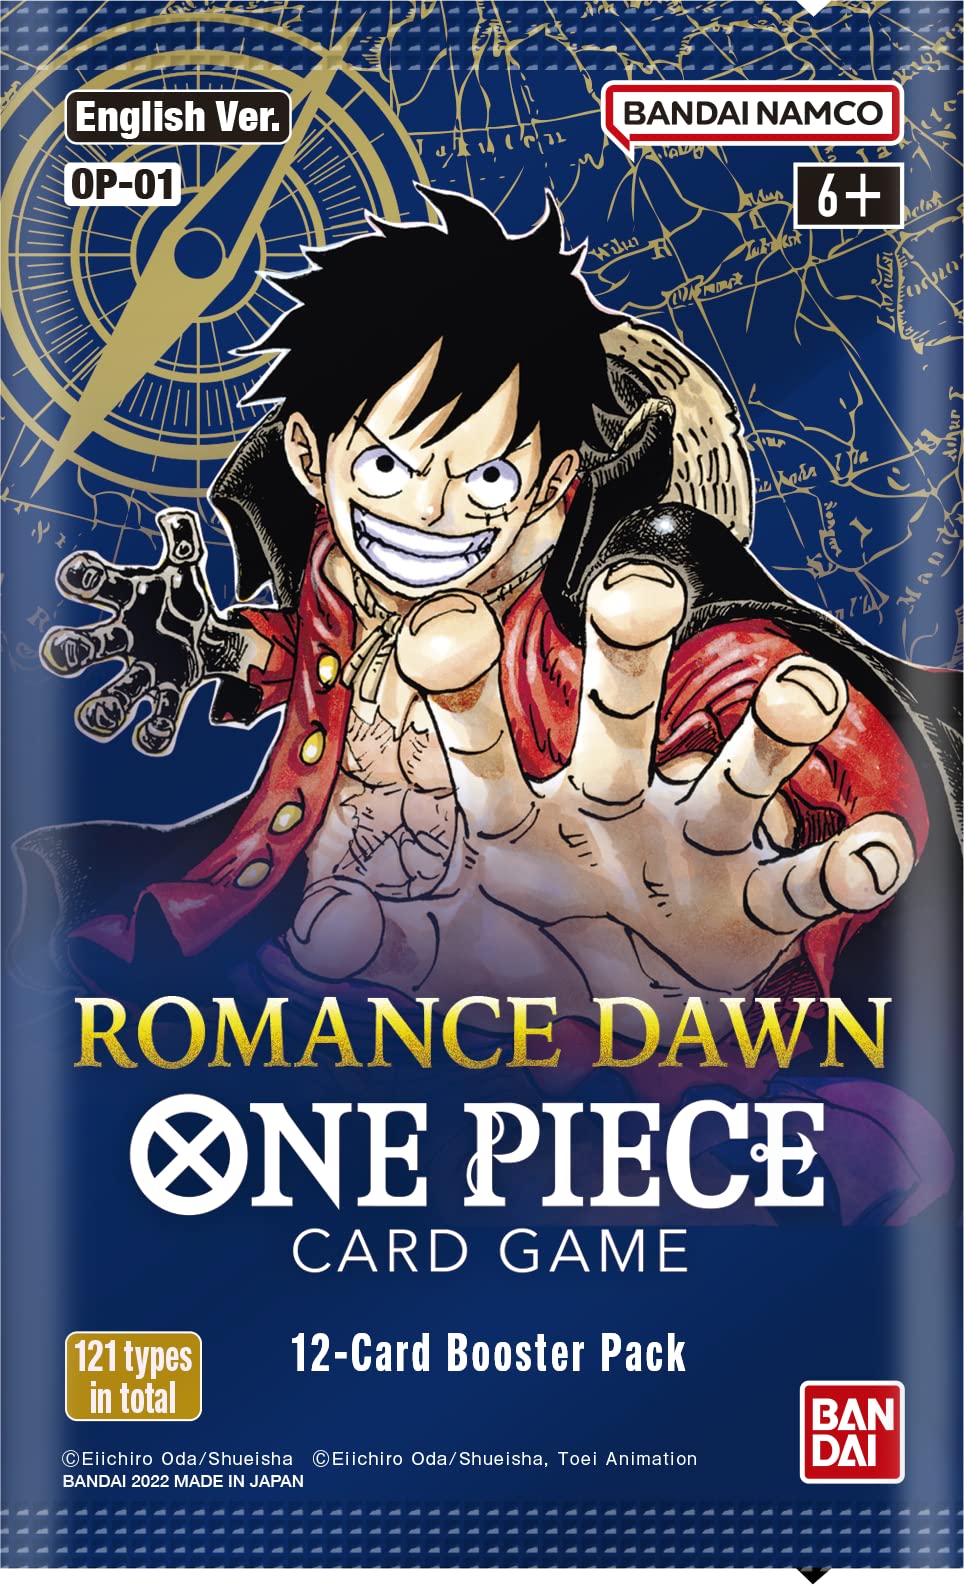 Mua Bandai Namco Entertainment One Piece Tcg Romance Dawn Booster Pack Trên Amazon Mỹ Chính 